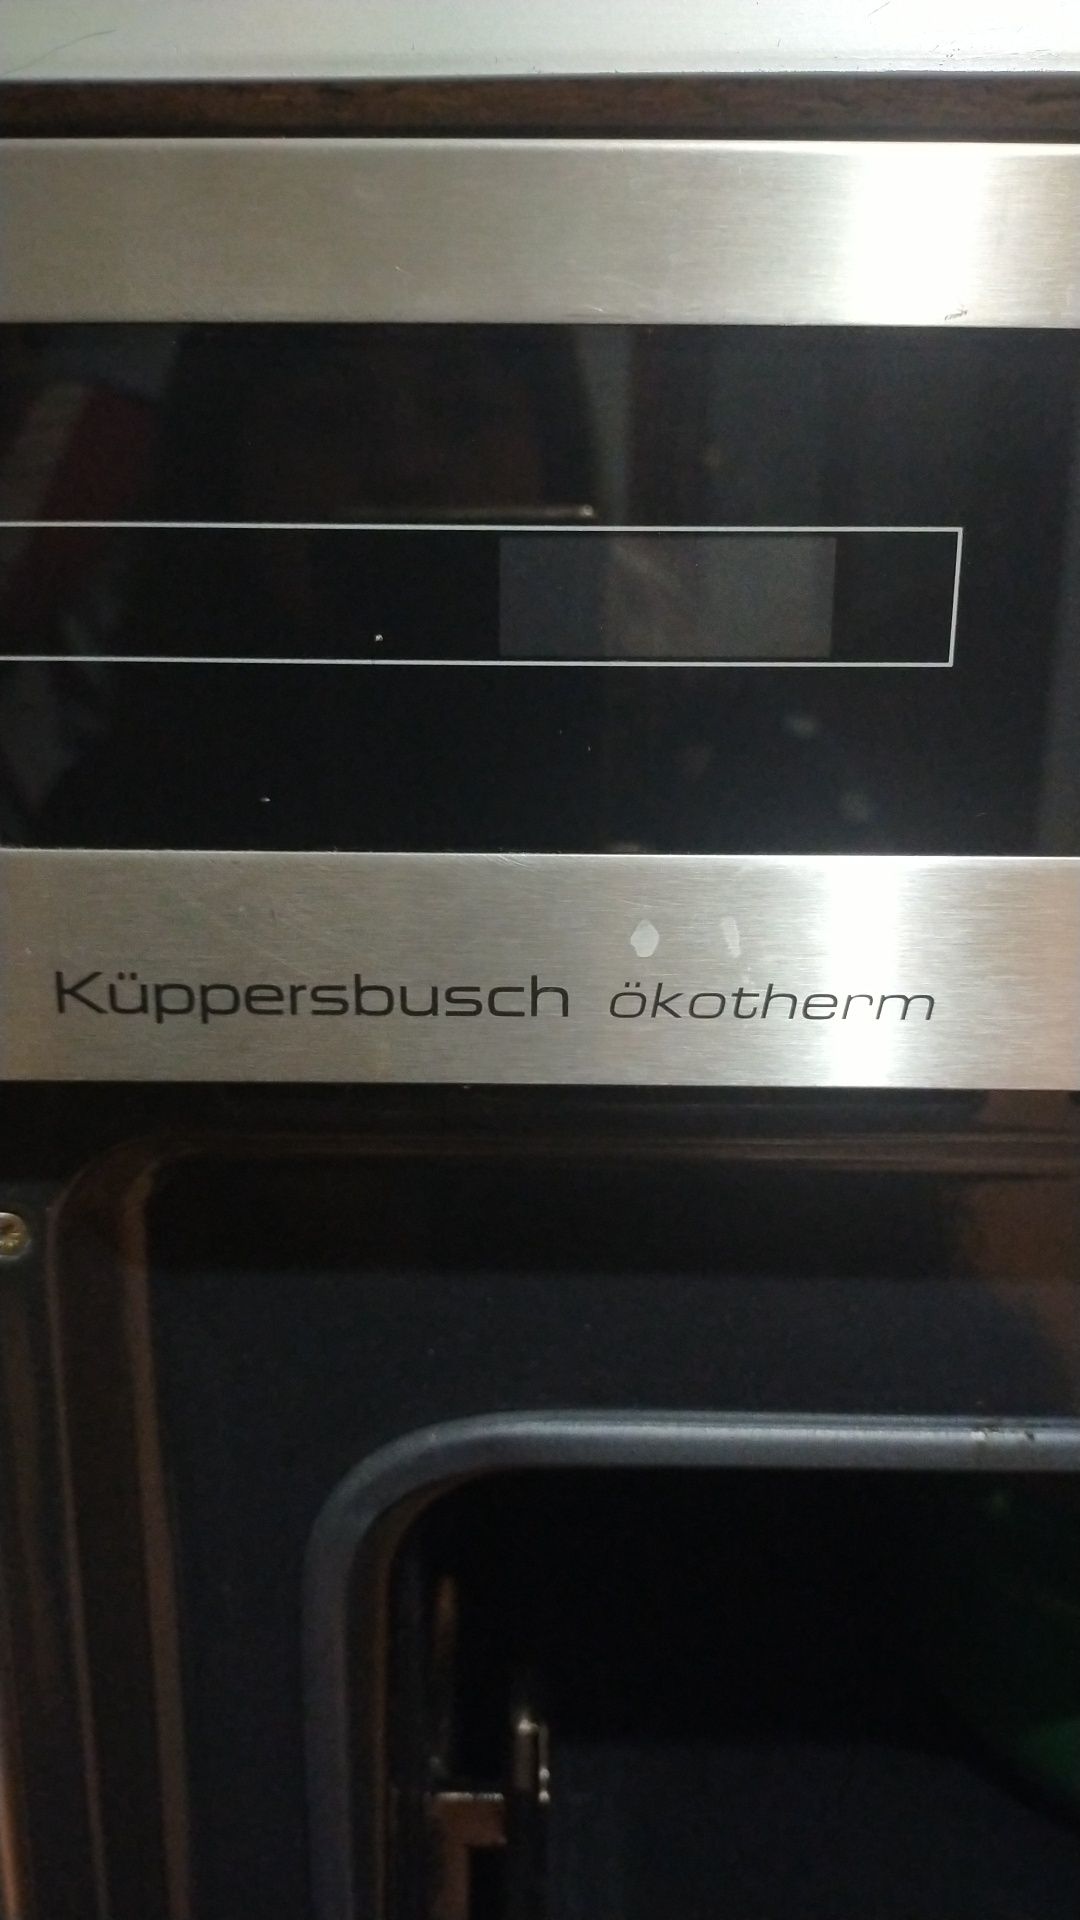 Cuptor incorporabil Kuppersbuch